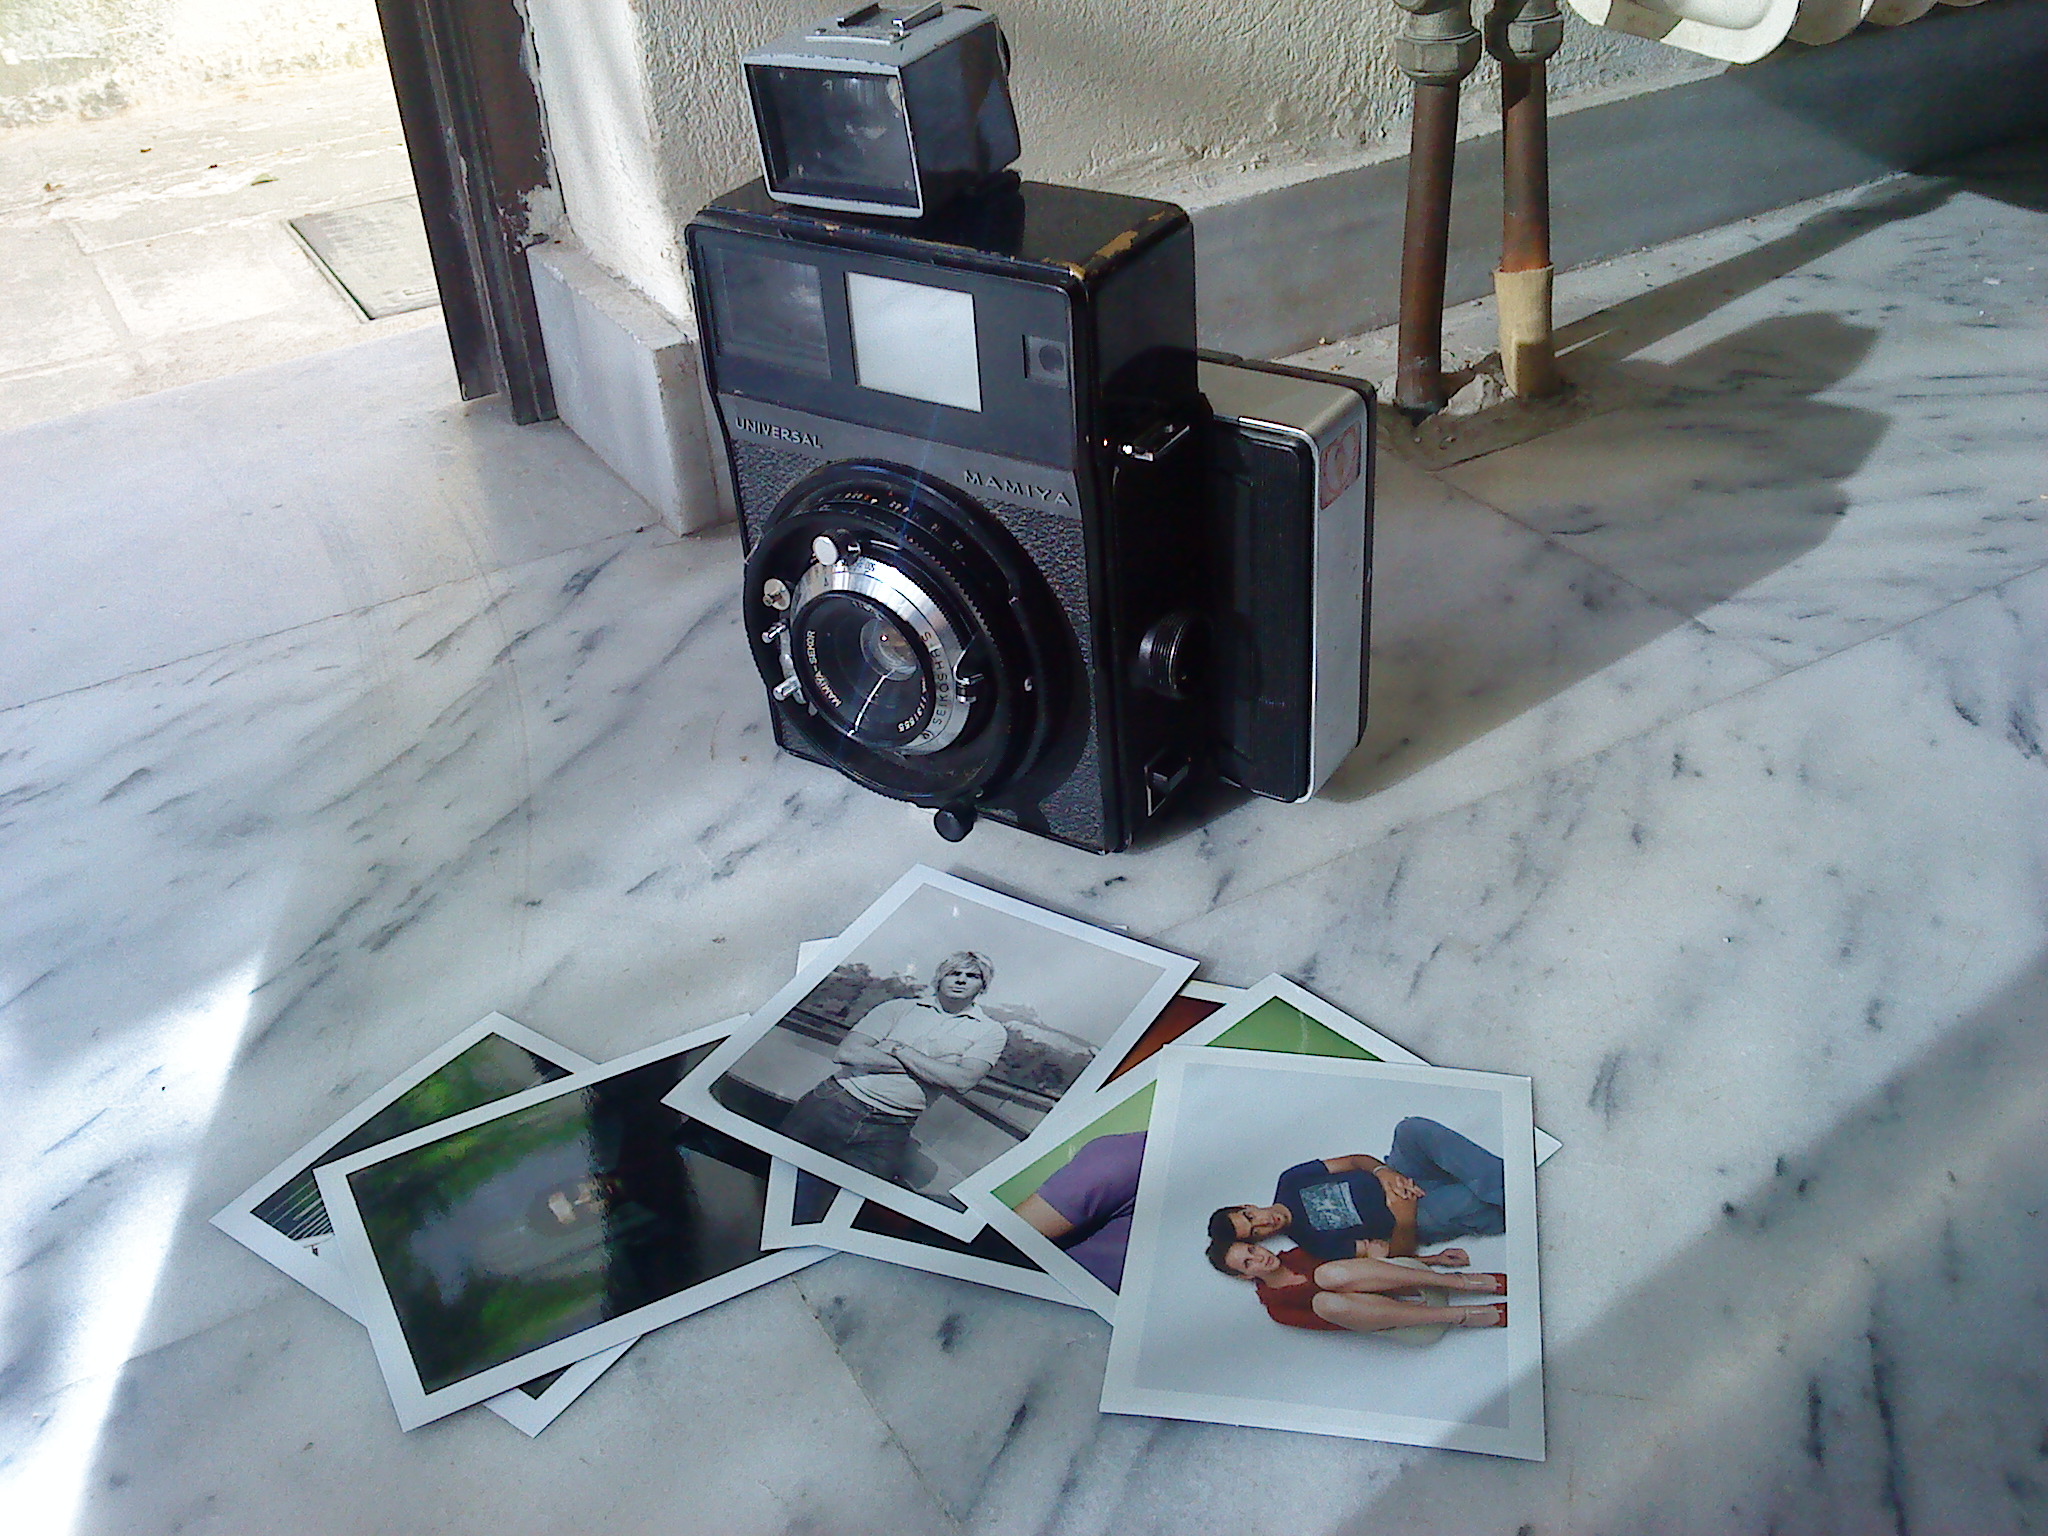 Last Polaroid camera: an old Mamiya